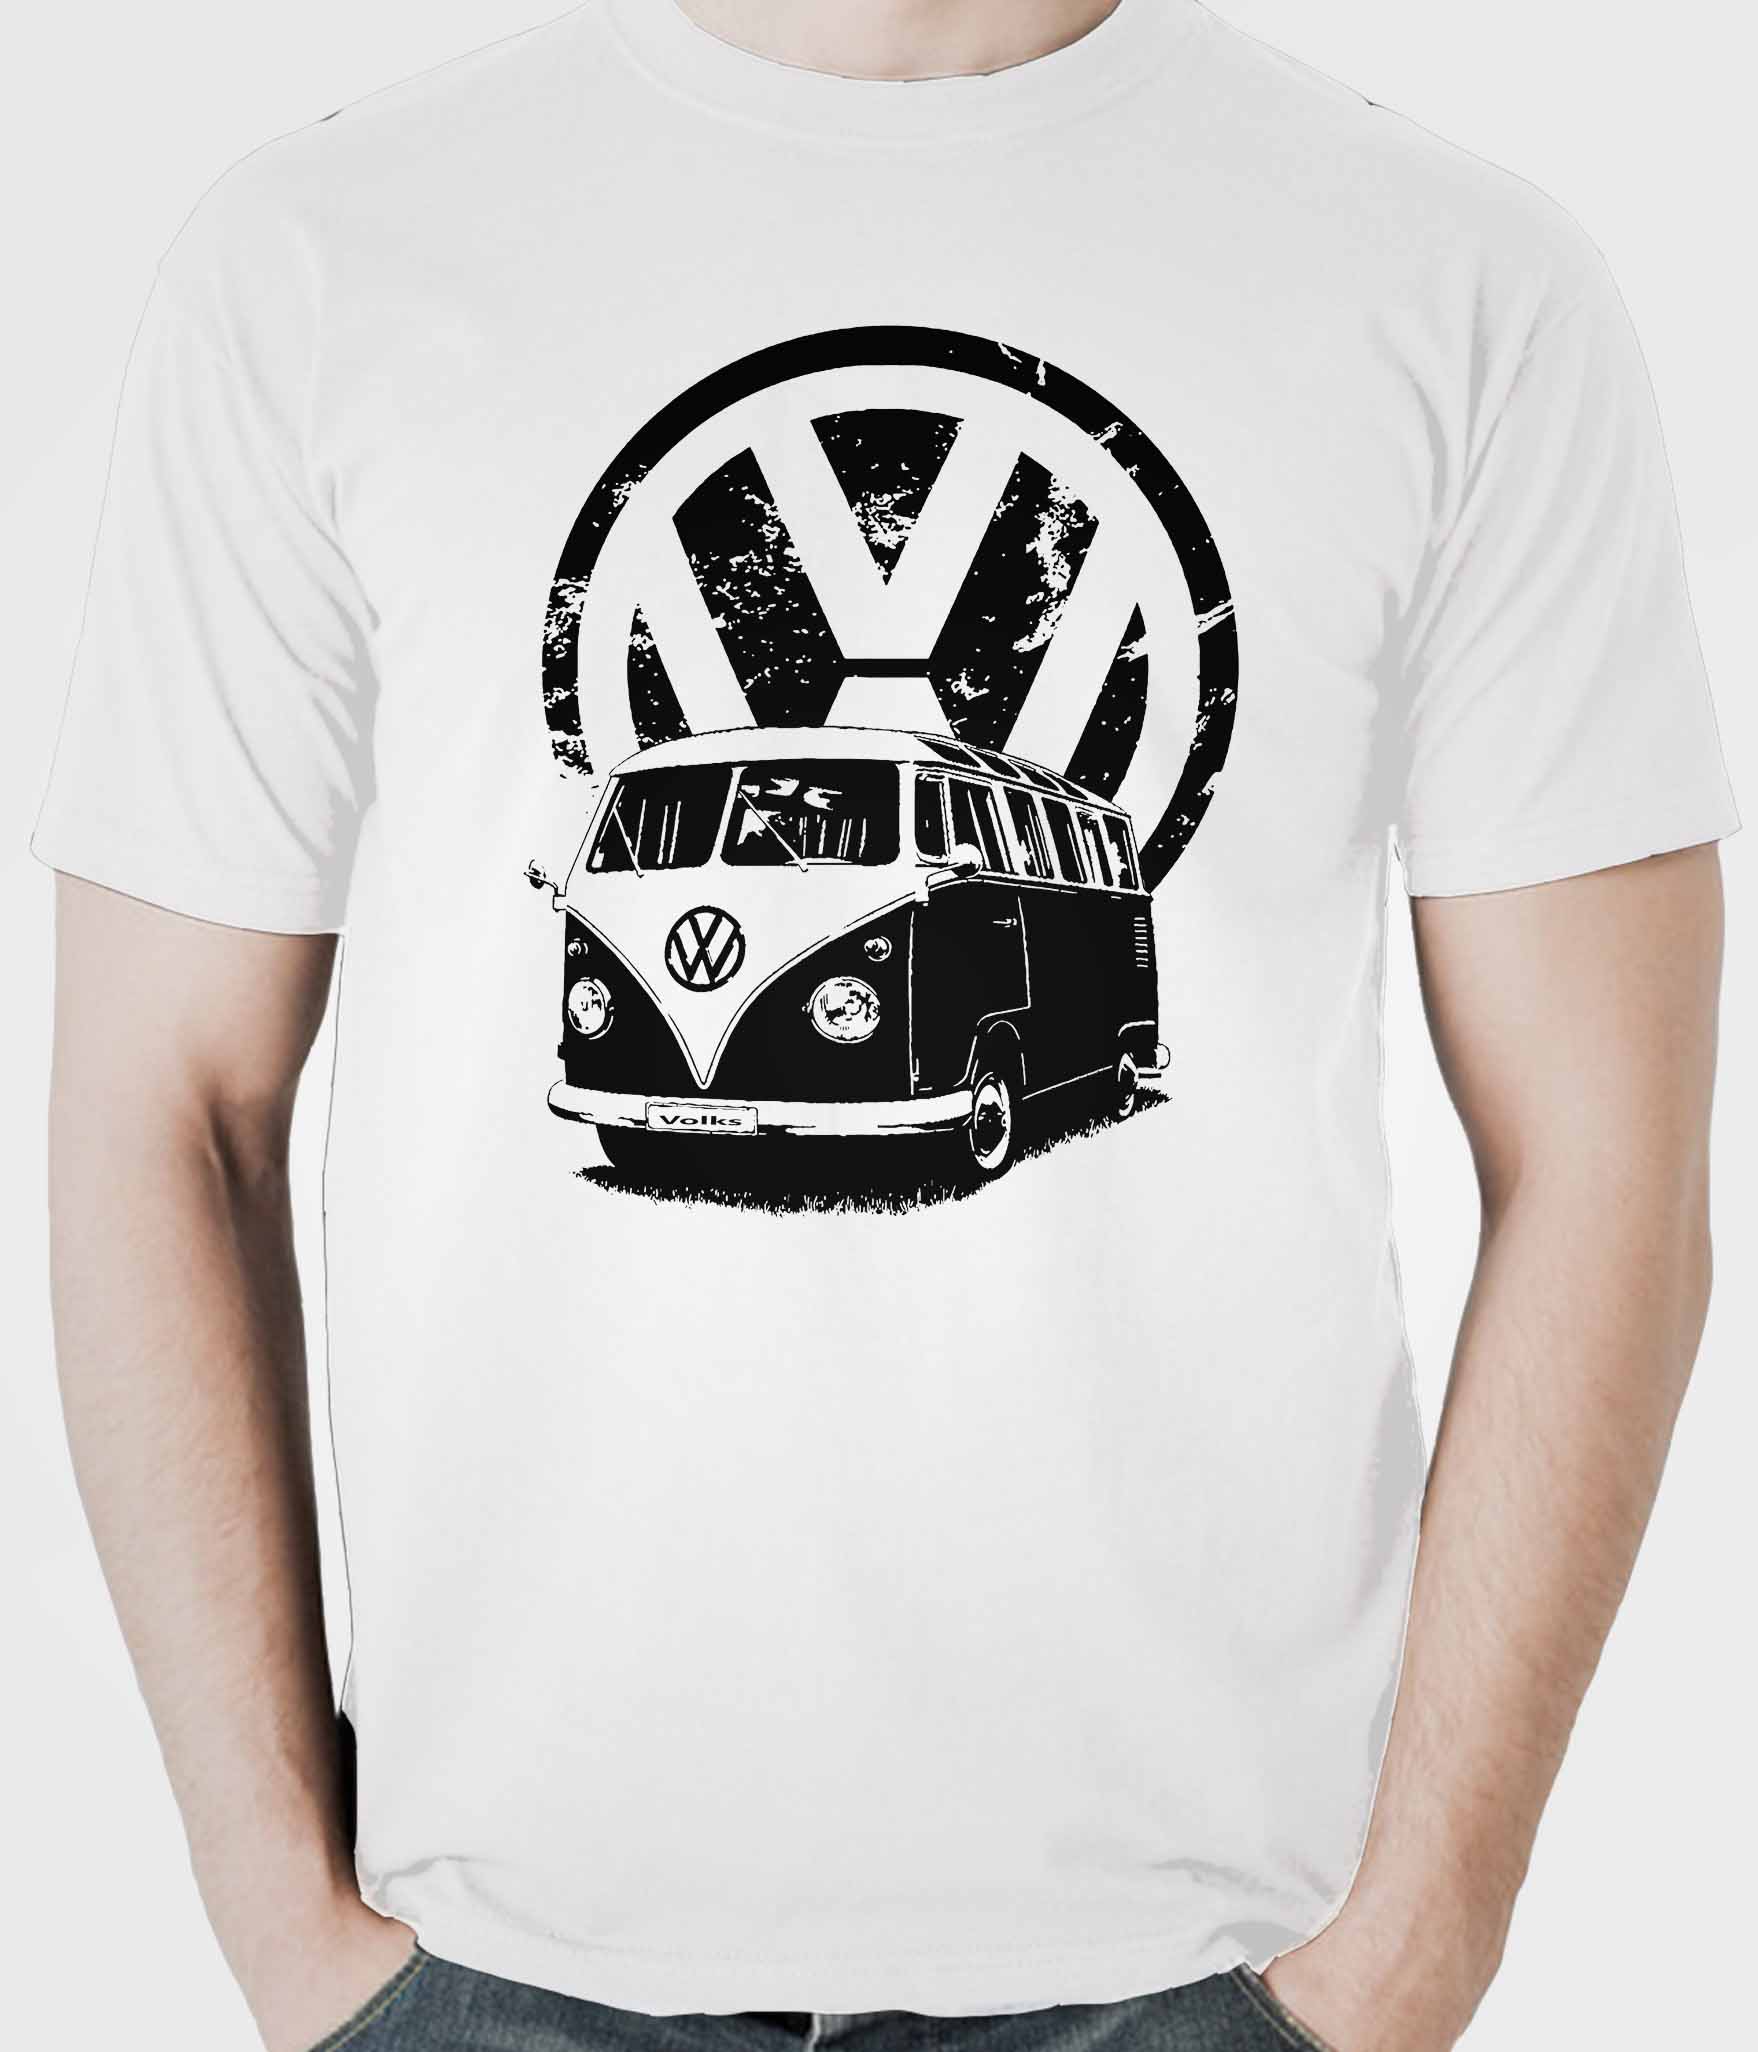 Foresee Emulate ventilation Camiseta Kombi Símbolo VW - Blendup Store